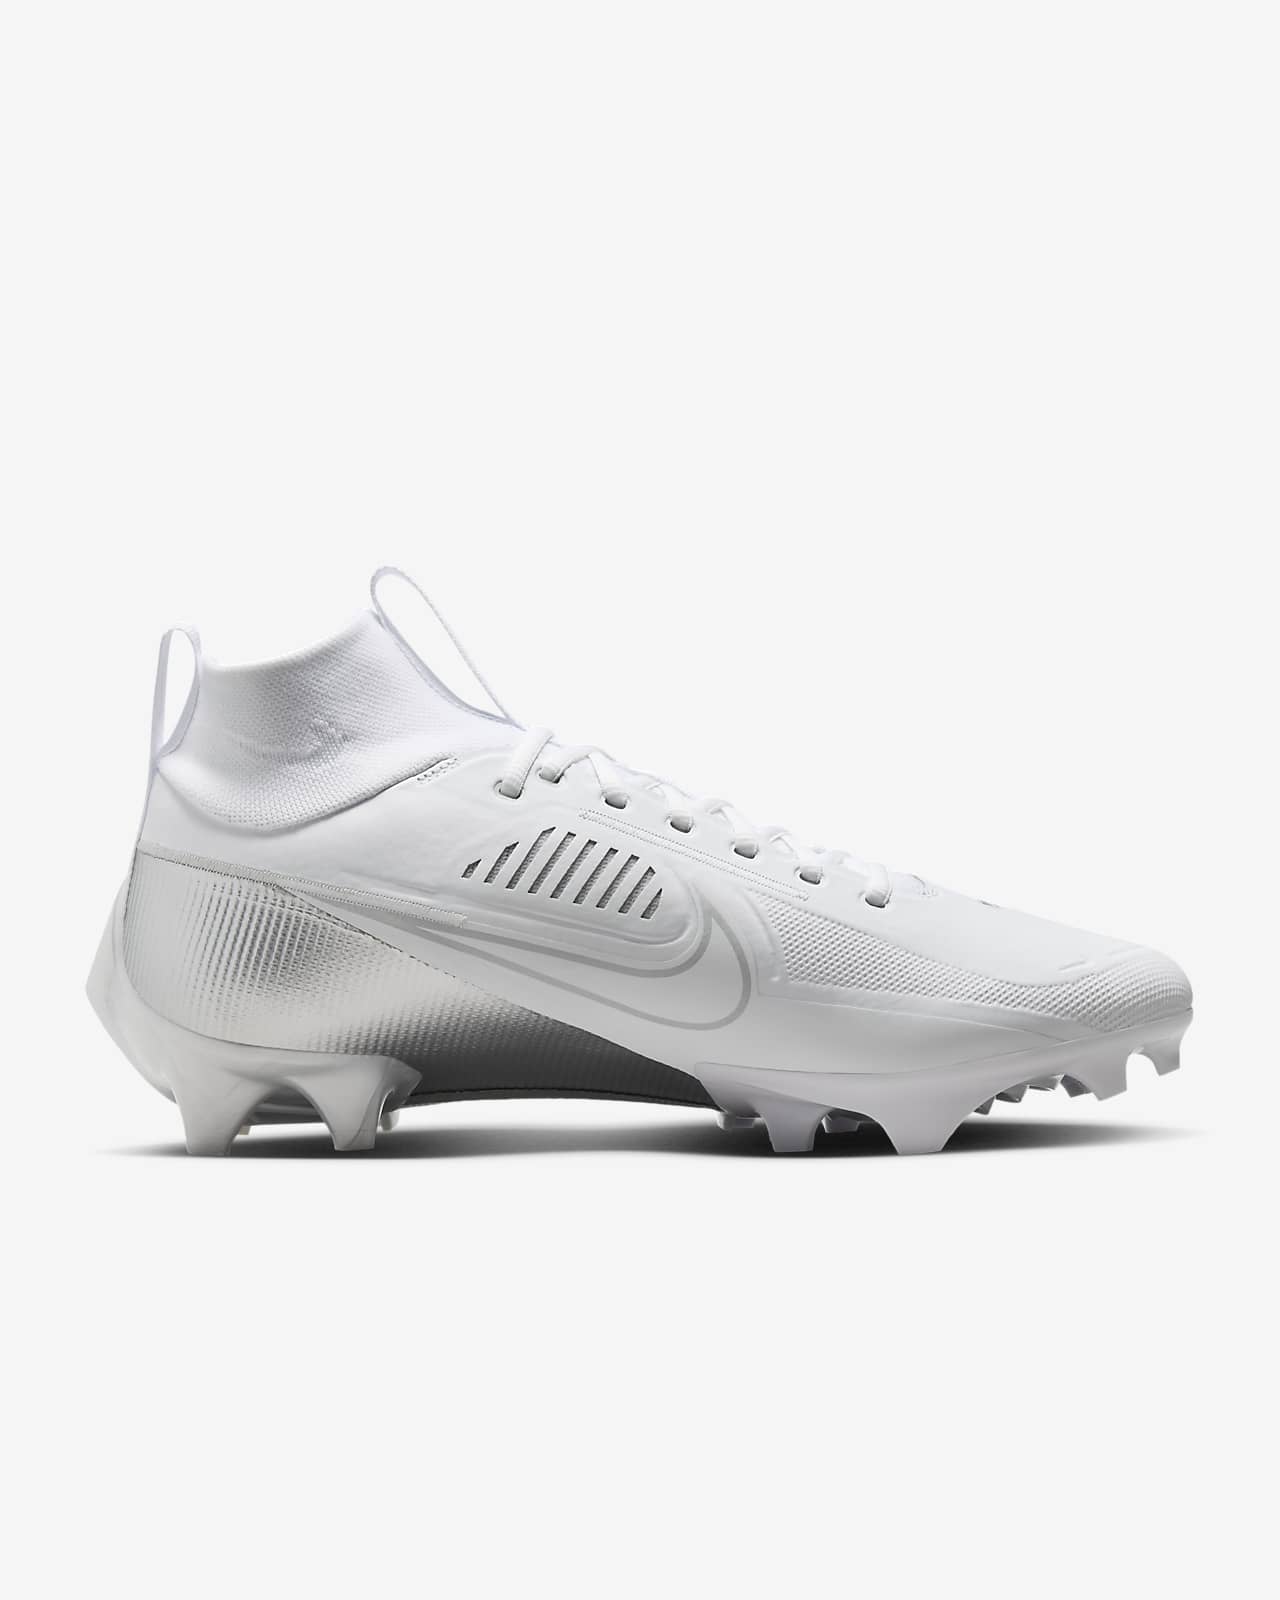 Nike Men's Vapor Edge Pro 360 2 Football Cleats, Size 13, White/Silver